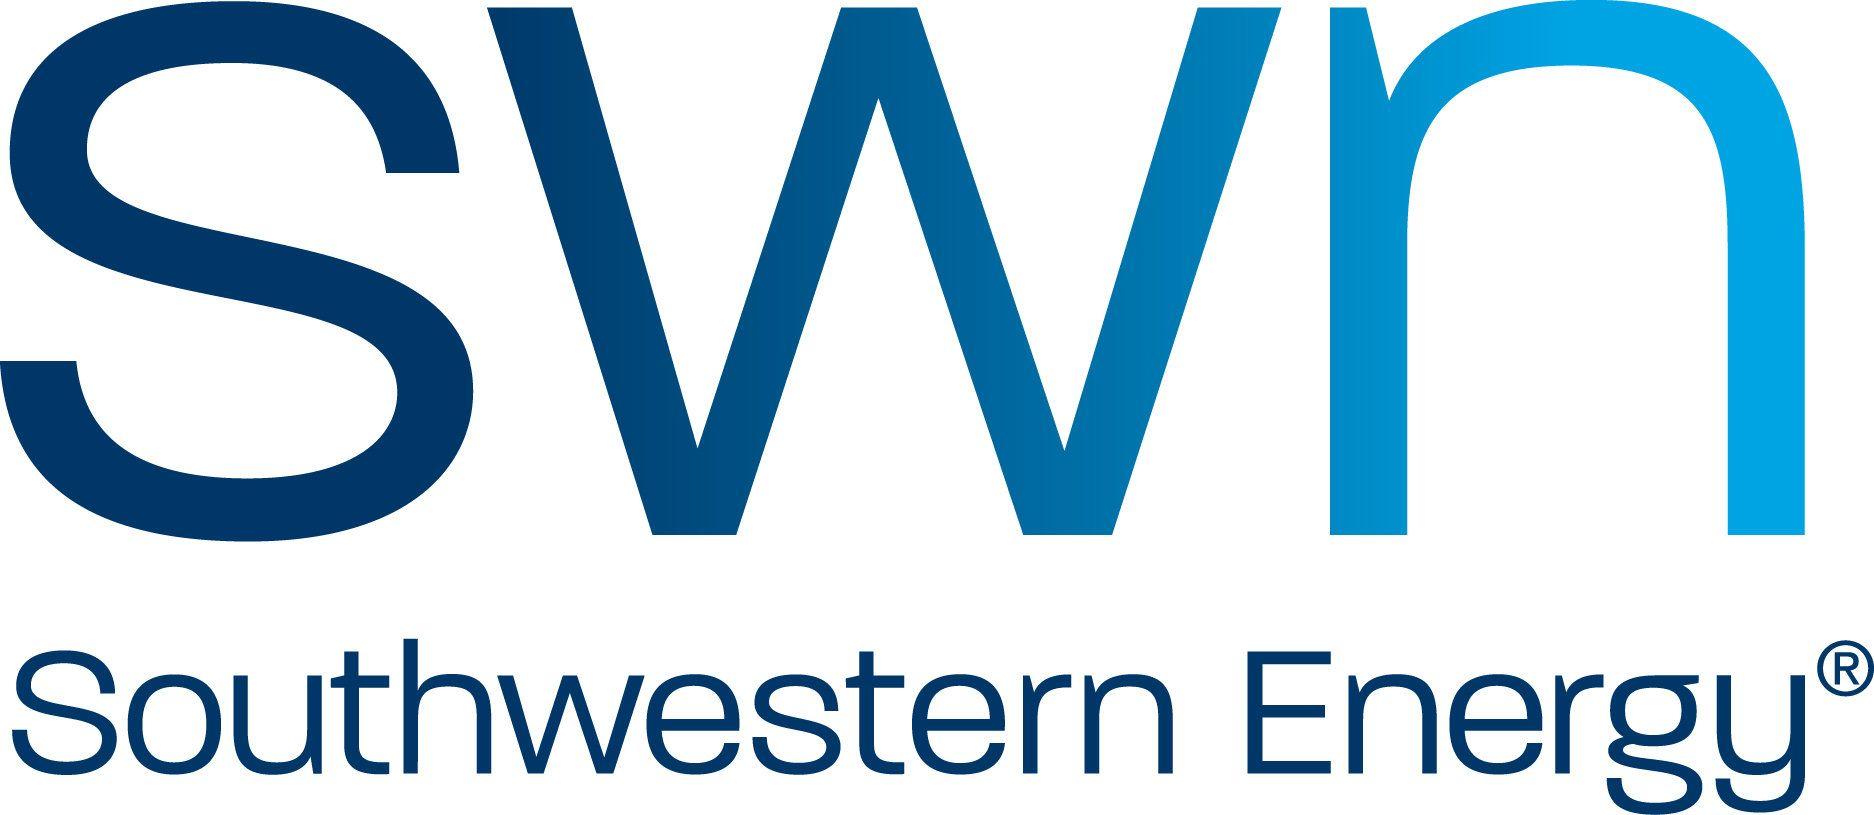 Southwest Company Logo - Southwestern Energy cuts 100 jobs, has no drilling rigs